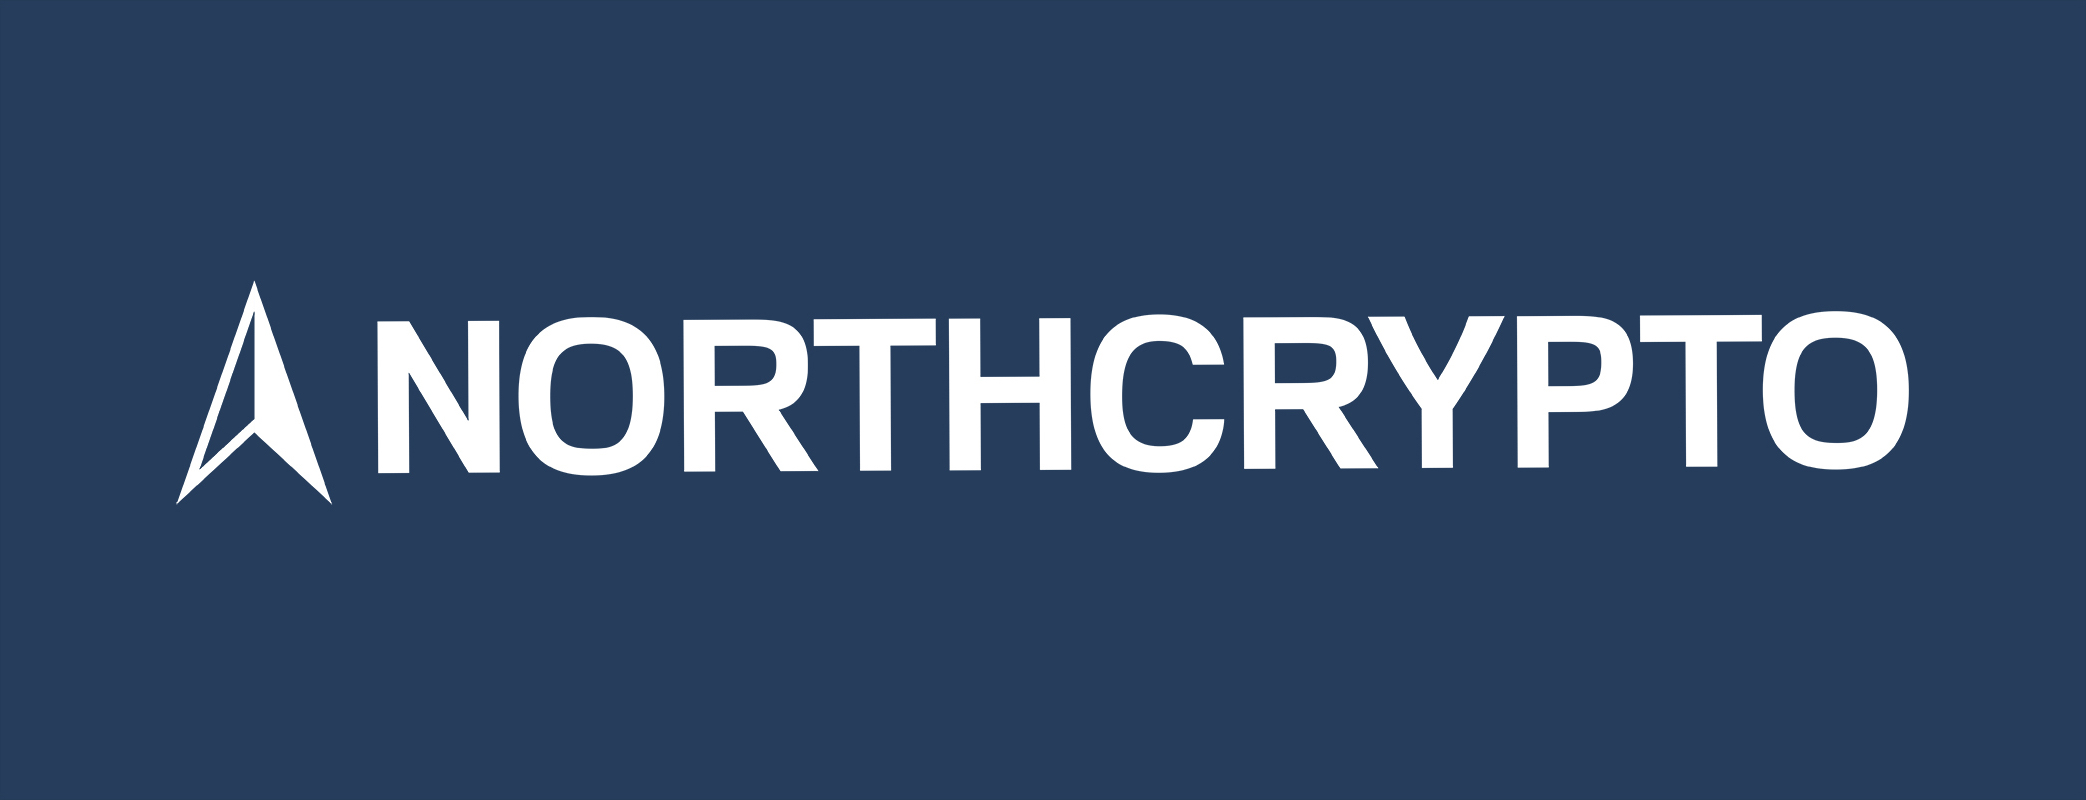 Tiedote: Northcrypto ja Ethereumin merge